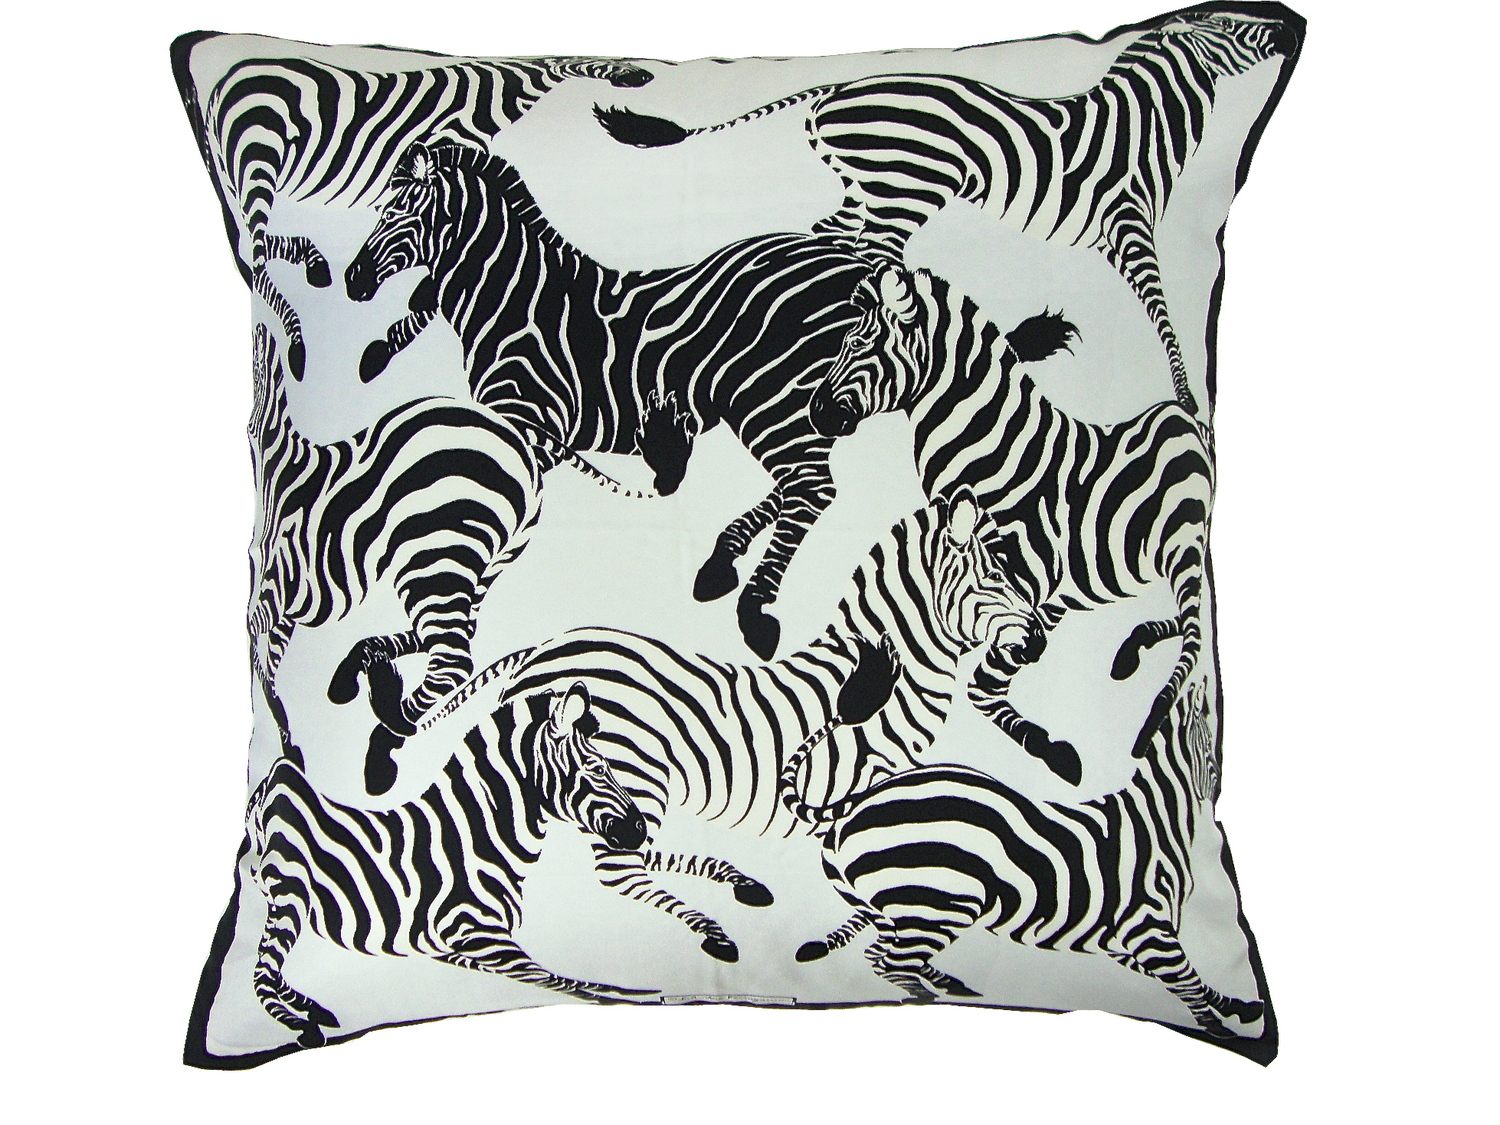 Ferragamo Zebra Pillow 24x24 Tracy Smith New York Sofa Pillows